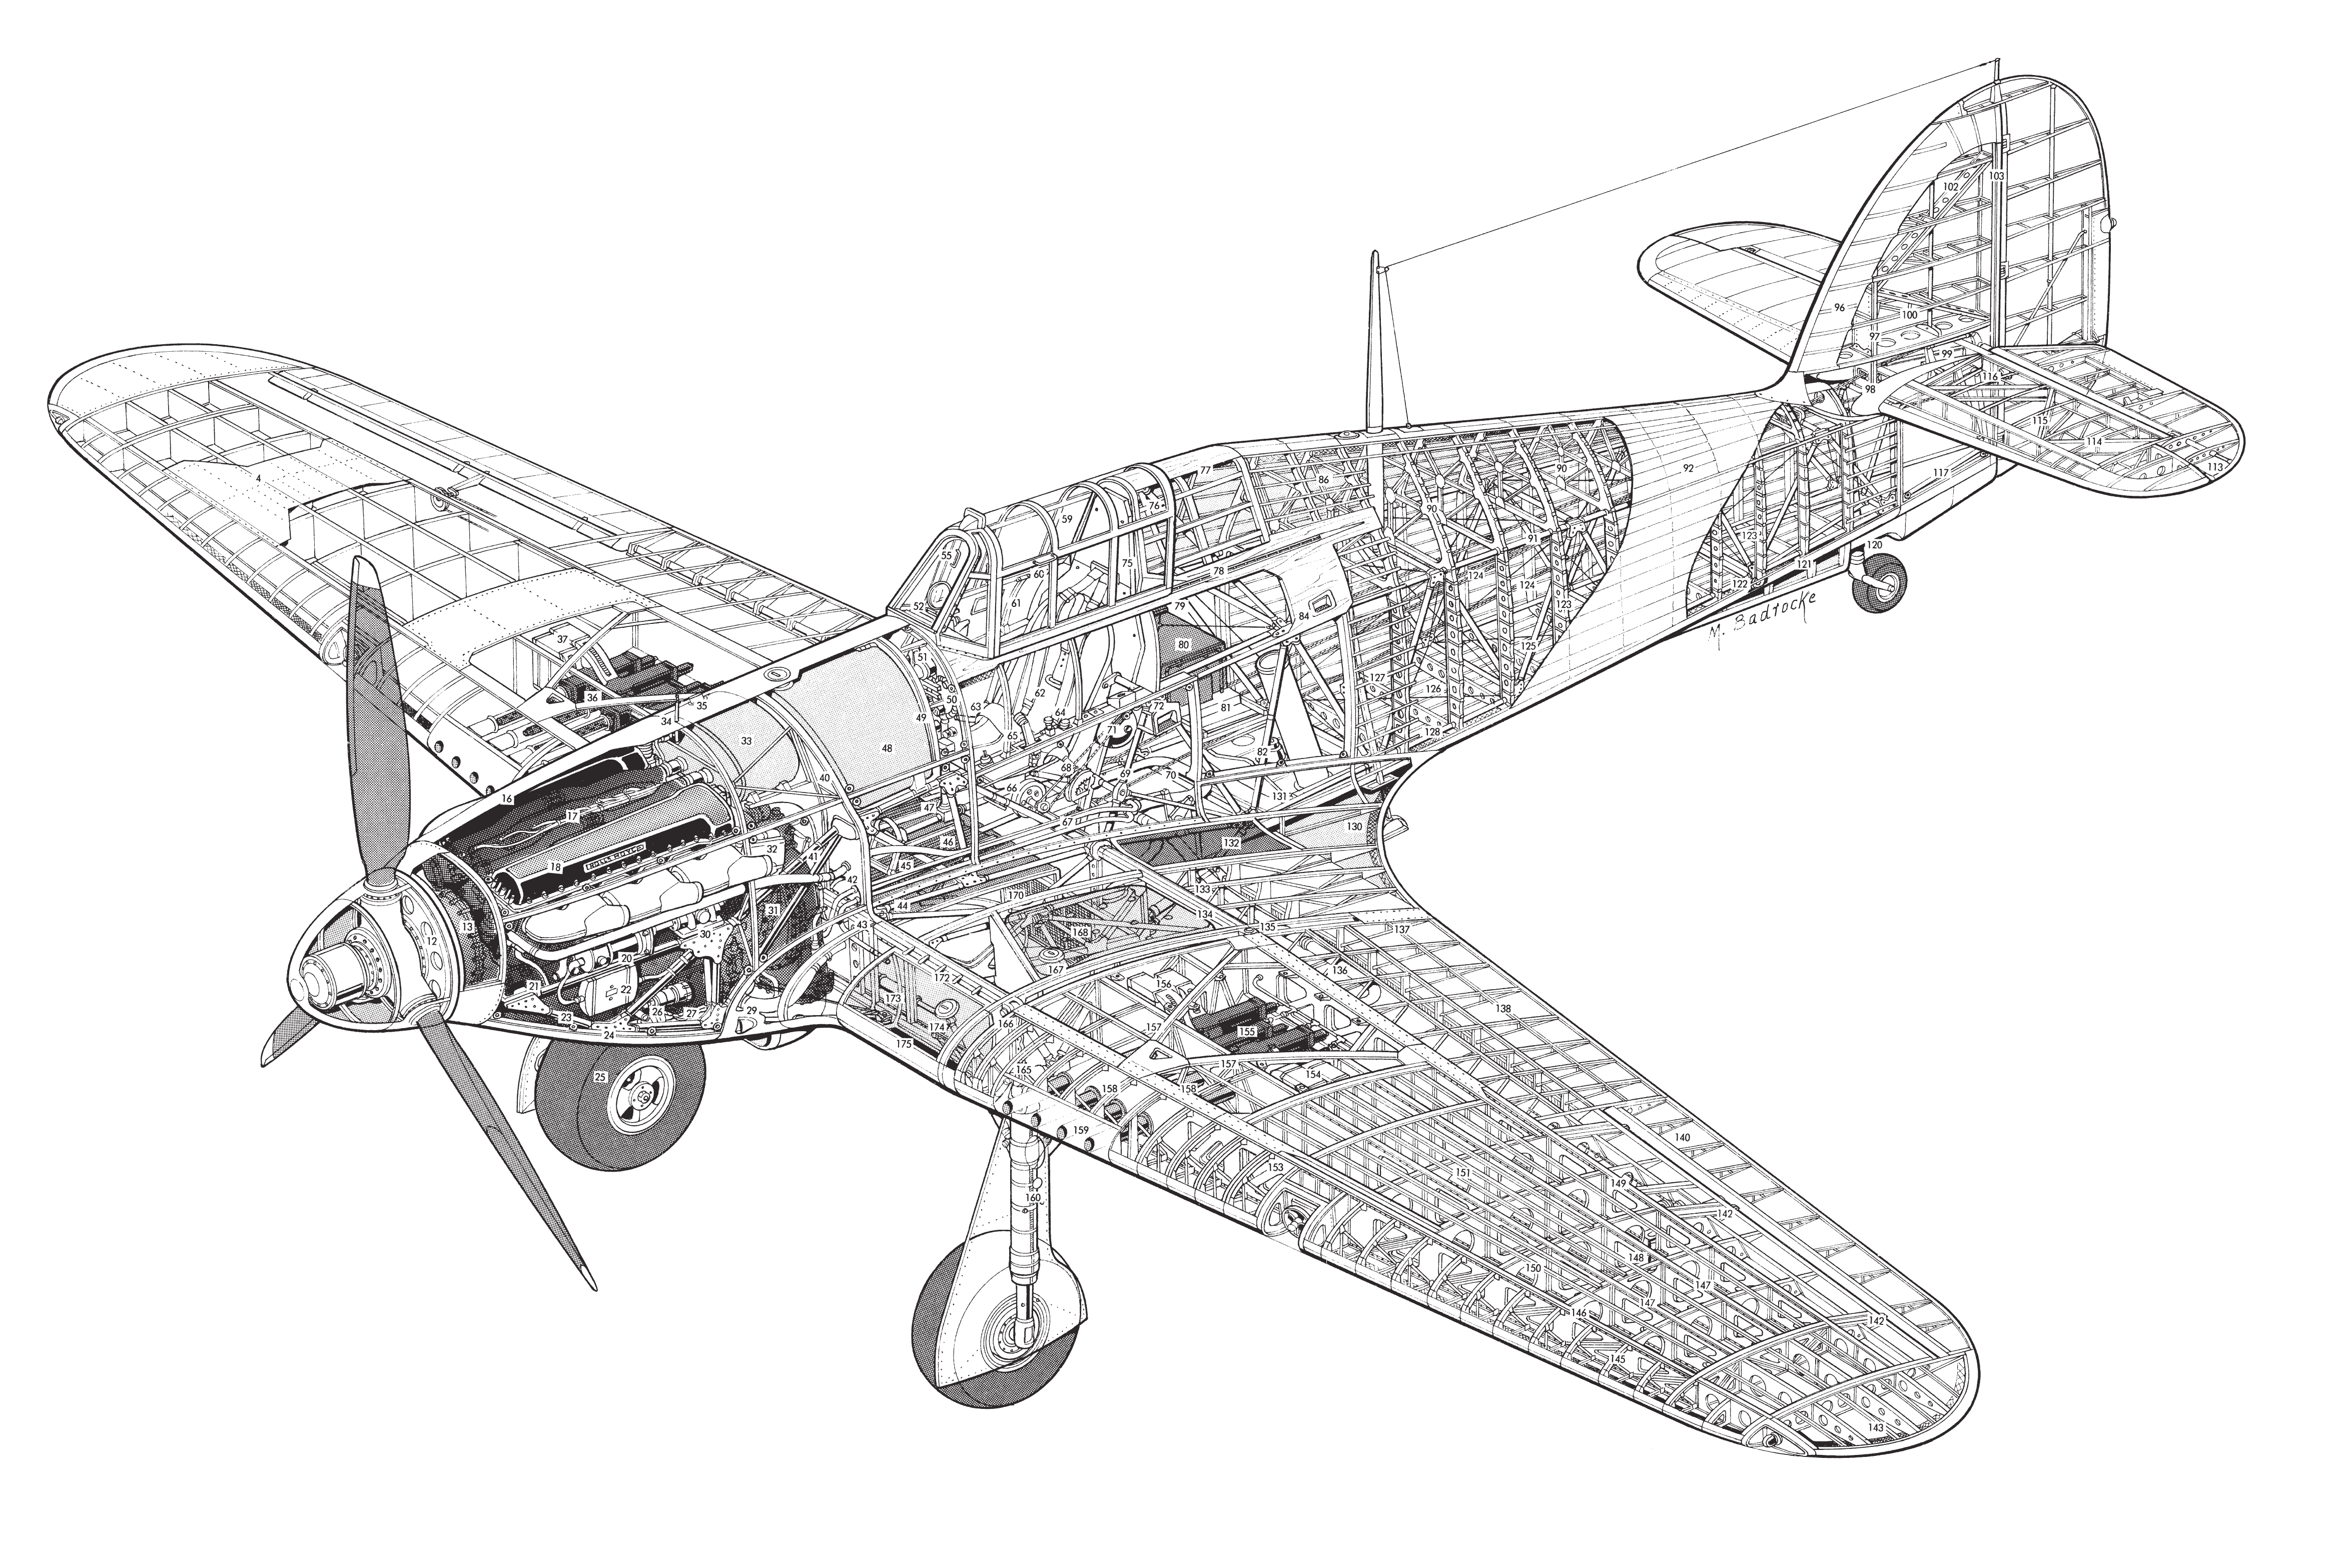 Hawker Hurricane cutaway drawing